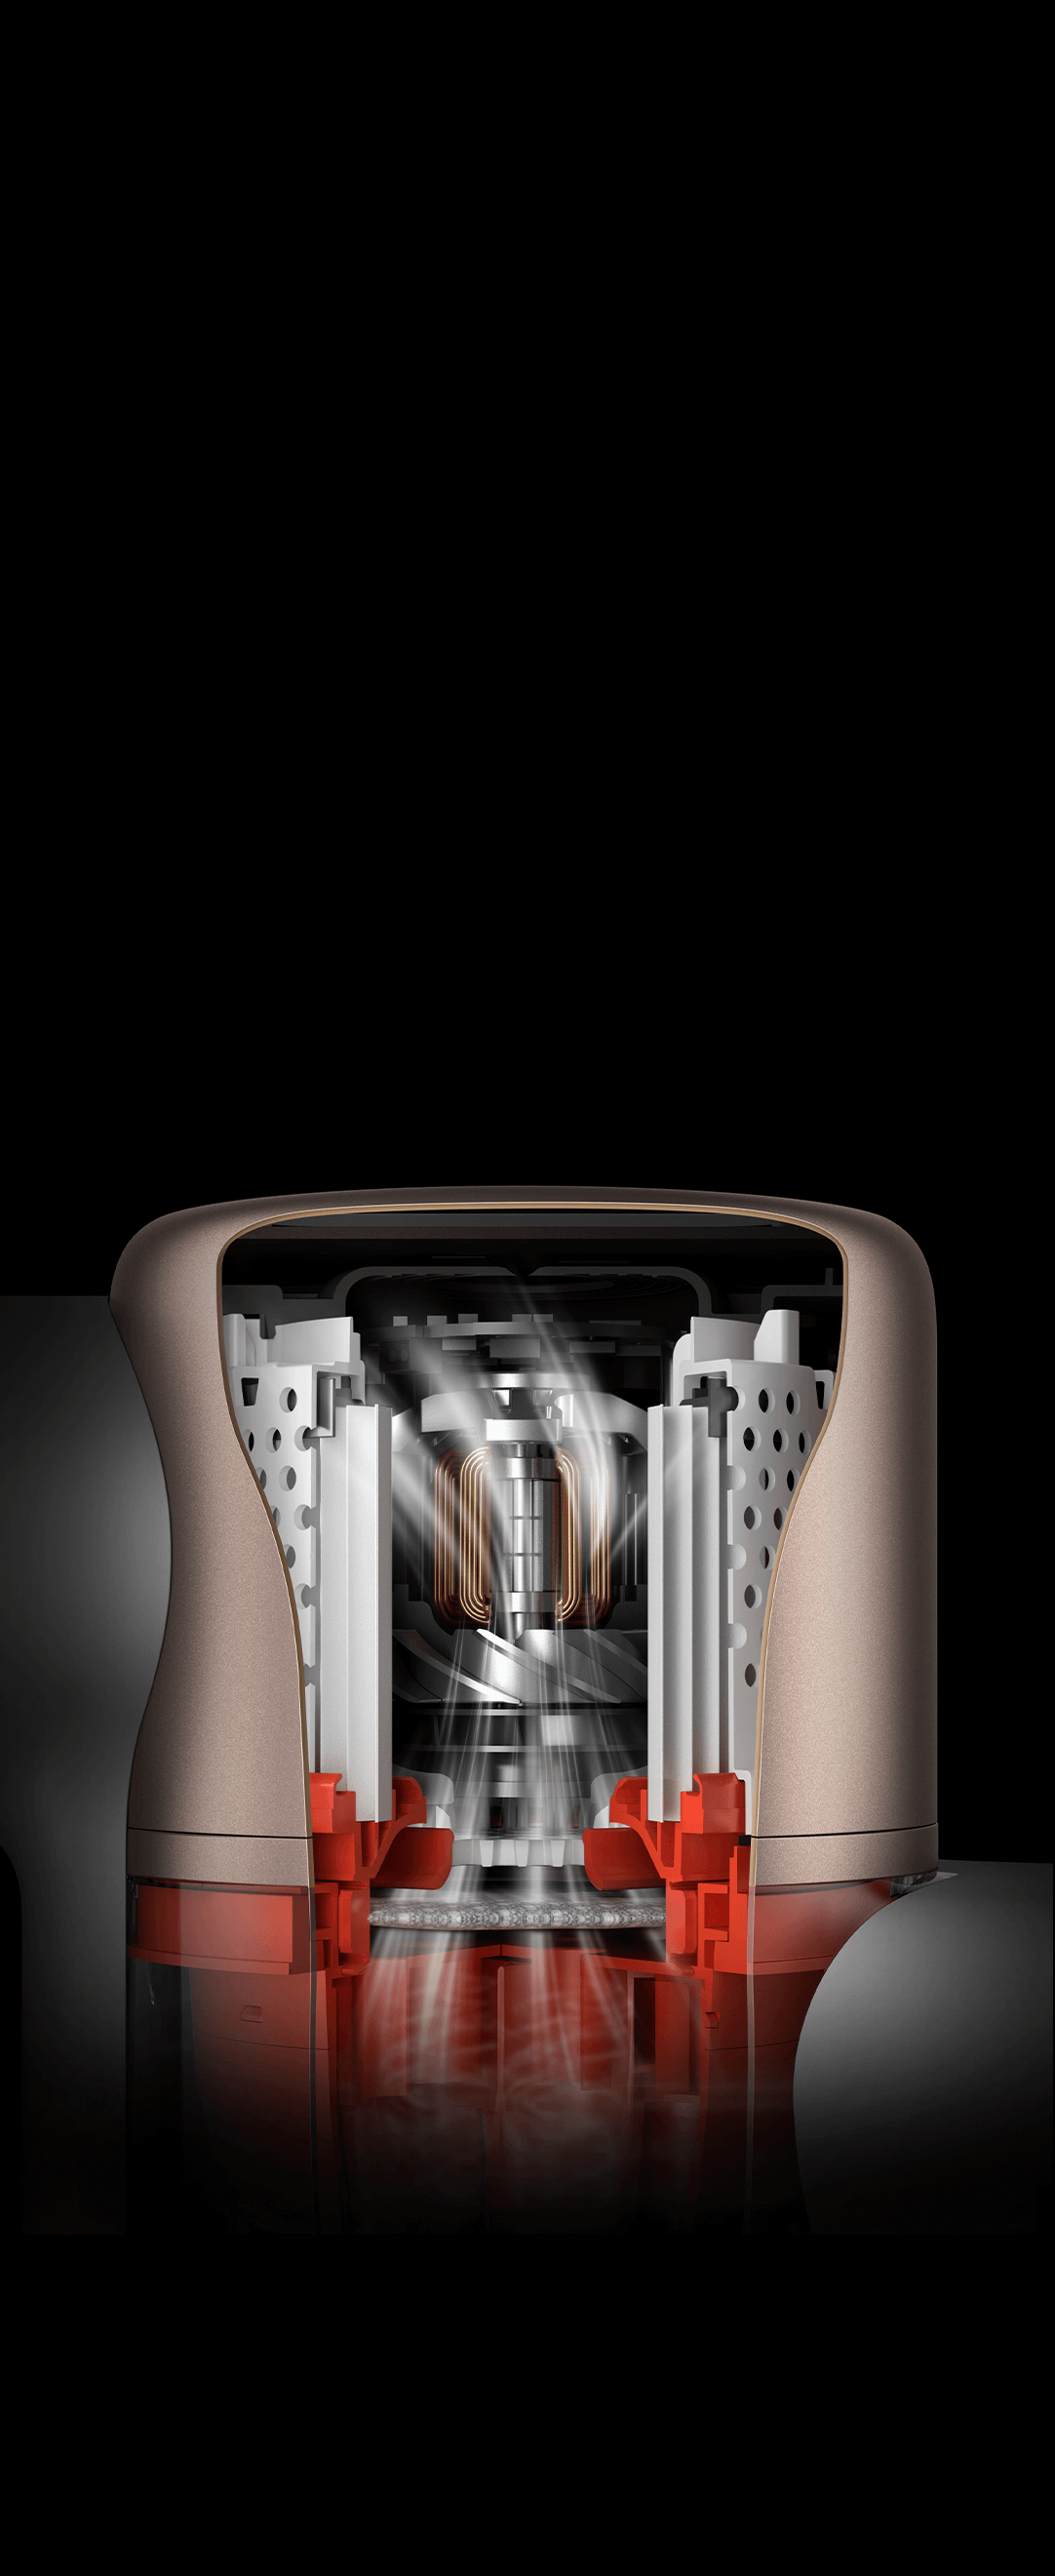 Xiaomi Mi Vacuum Cleaner G10, Wireless Electric Broom, 150 AW